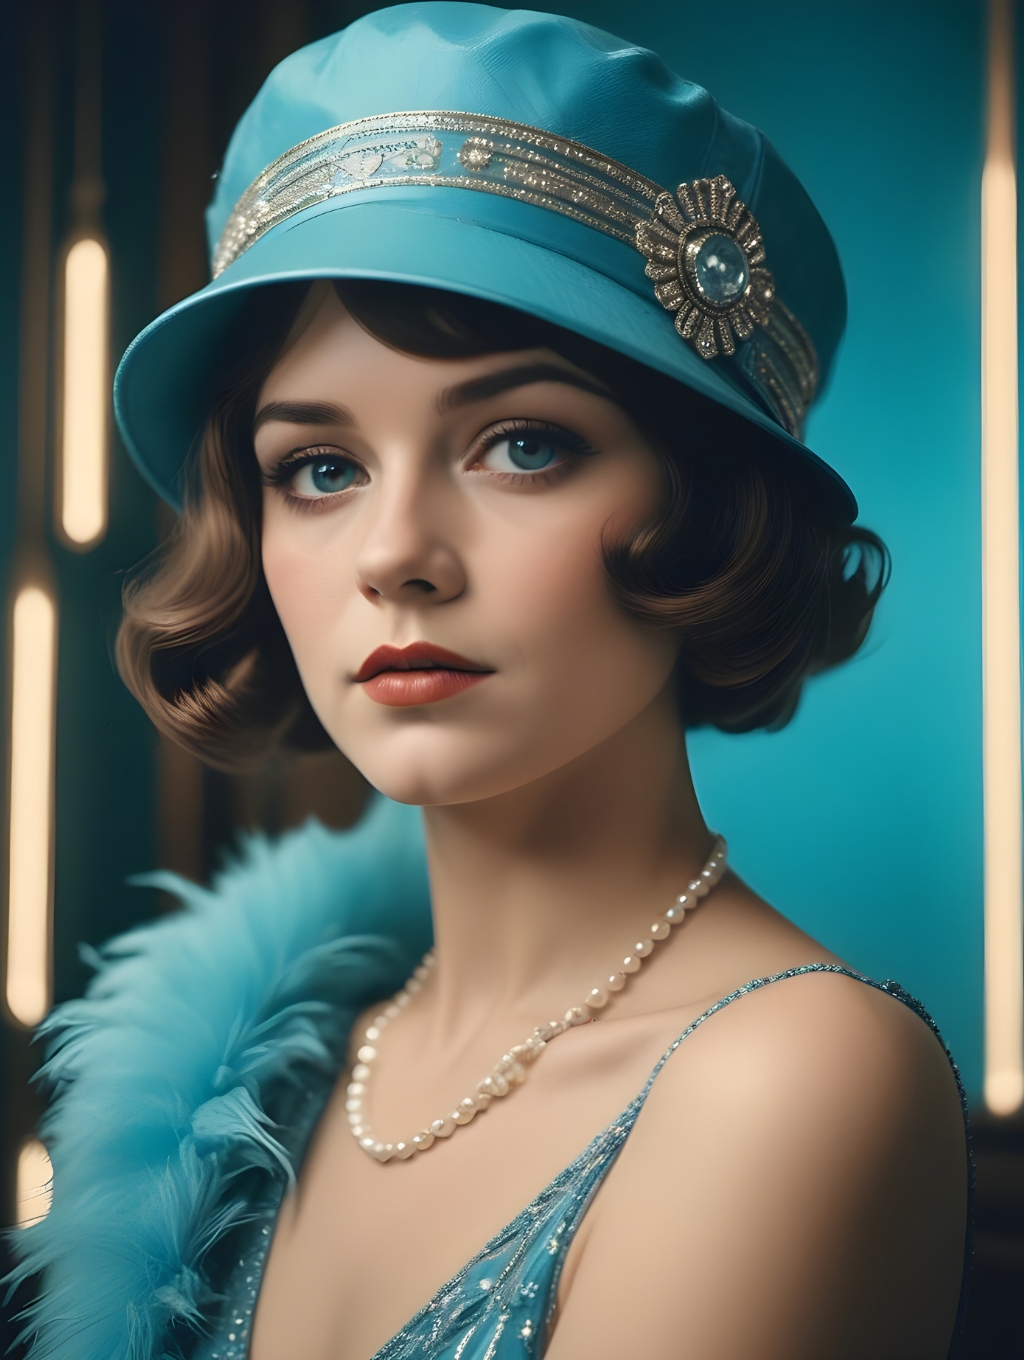 Gatsby Portraits Women: Image Frames & Self-Portraits-Theme:4